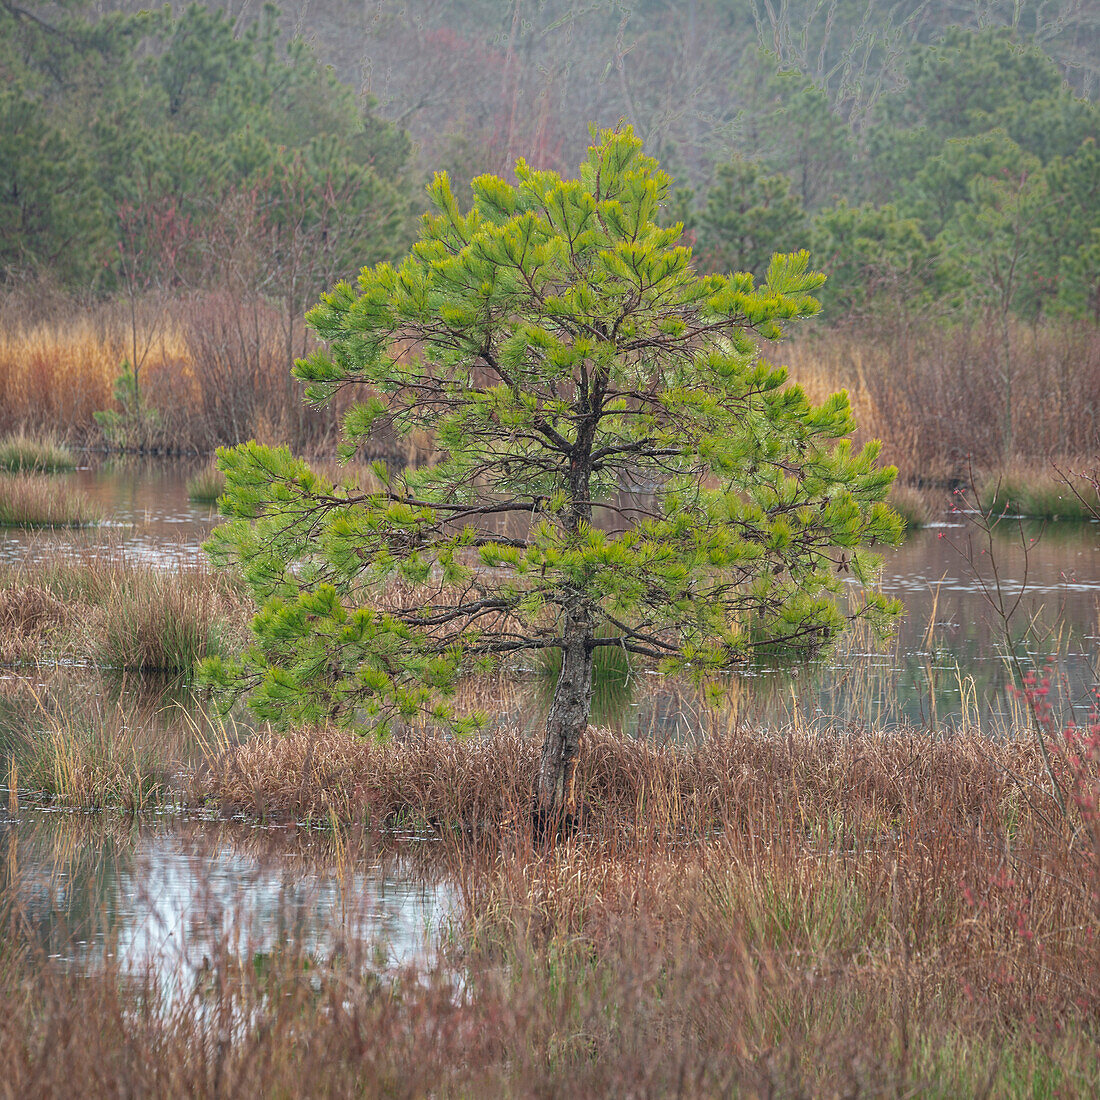 USA, New Jersey, Pine Barrens National Preserve. Kiefern im Sumpf.